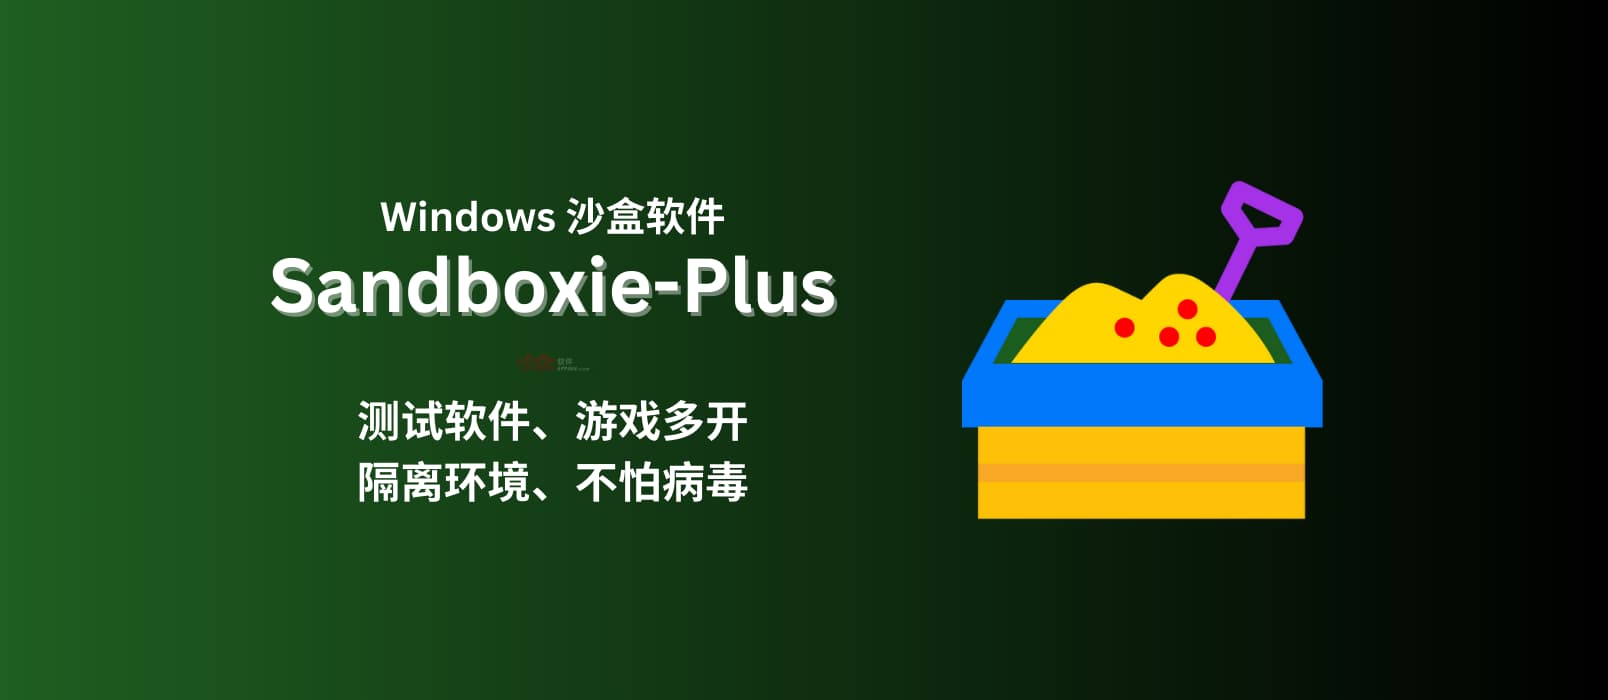 Sandboxie-Plus – 知名 Windows 沙盒软件，可用来测试、多开软件、隔离环境